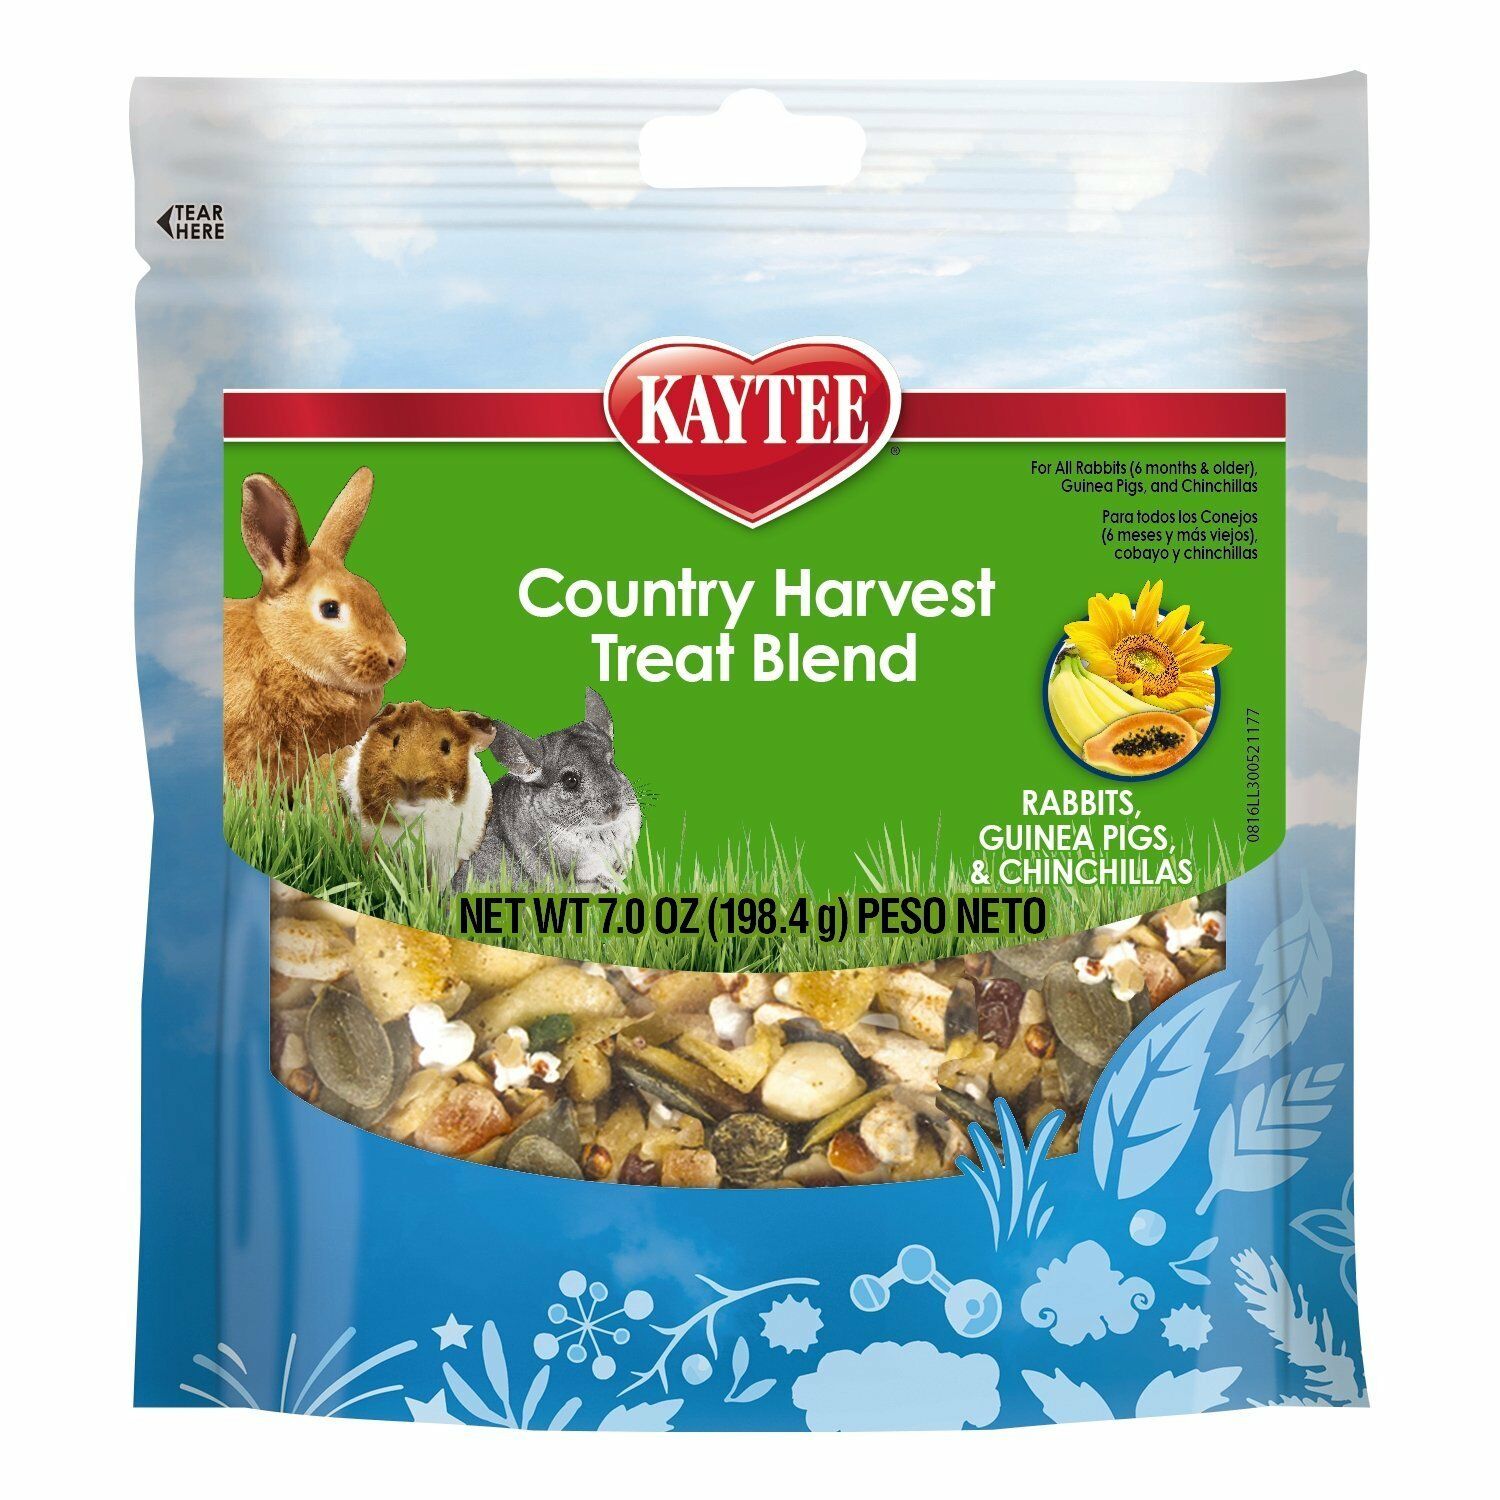 Kaytee Fiesta Country Harvest Blend Rabbit, Guinea Pig & Chinchilla Treats,7-oz